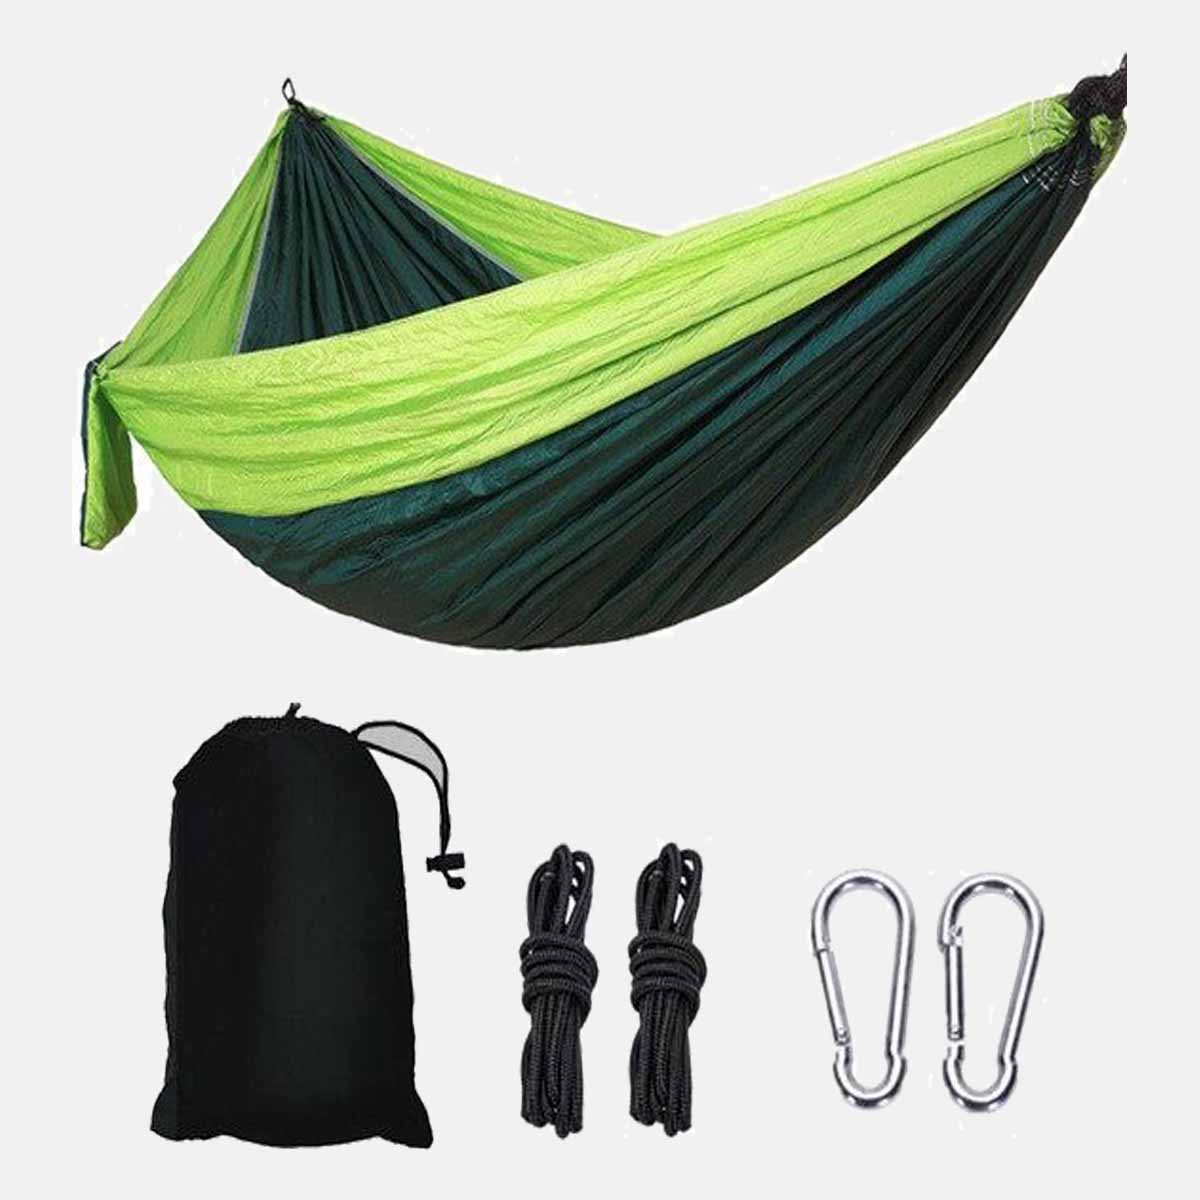 Portable Parachute Nylon Hammock Swing Outdoor Camping Hammock with Hammock Tree Straps